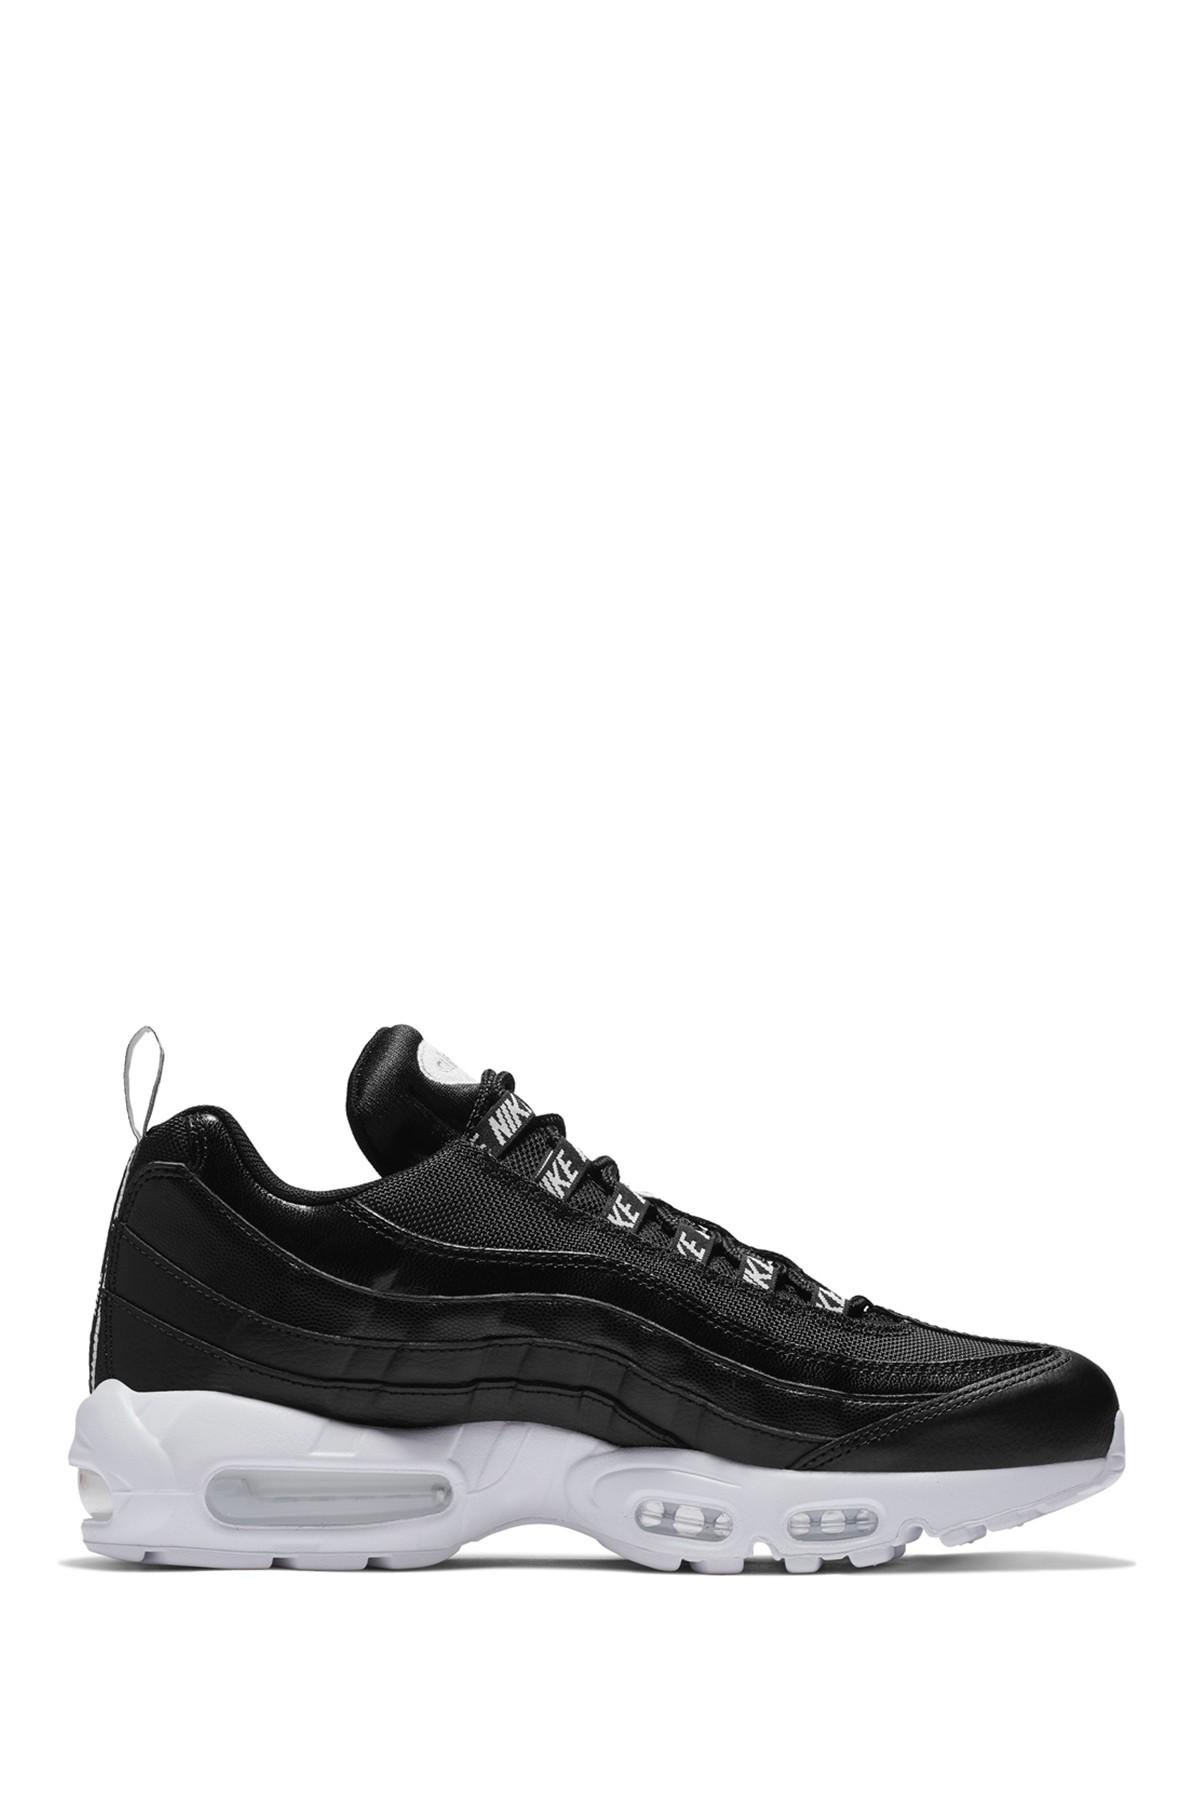 Nike Leather Air Max 95 Premium Black/ White/ Black for Men - Lyst